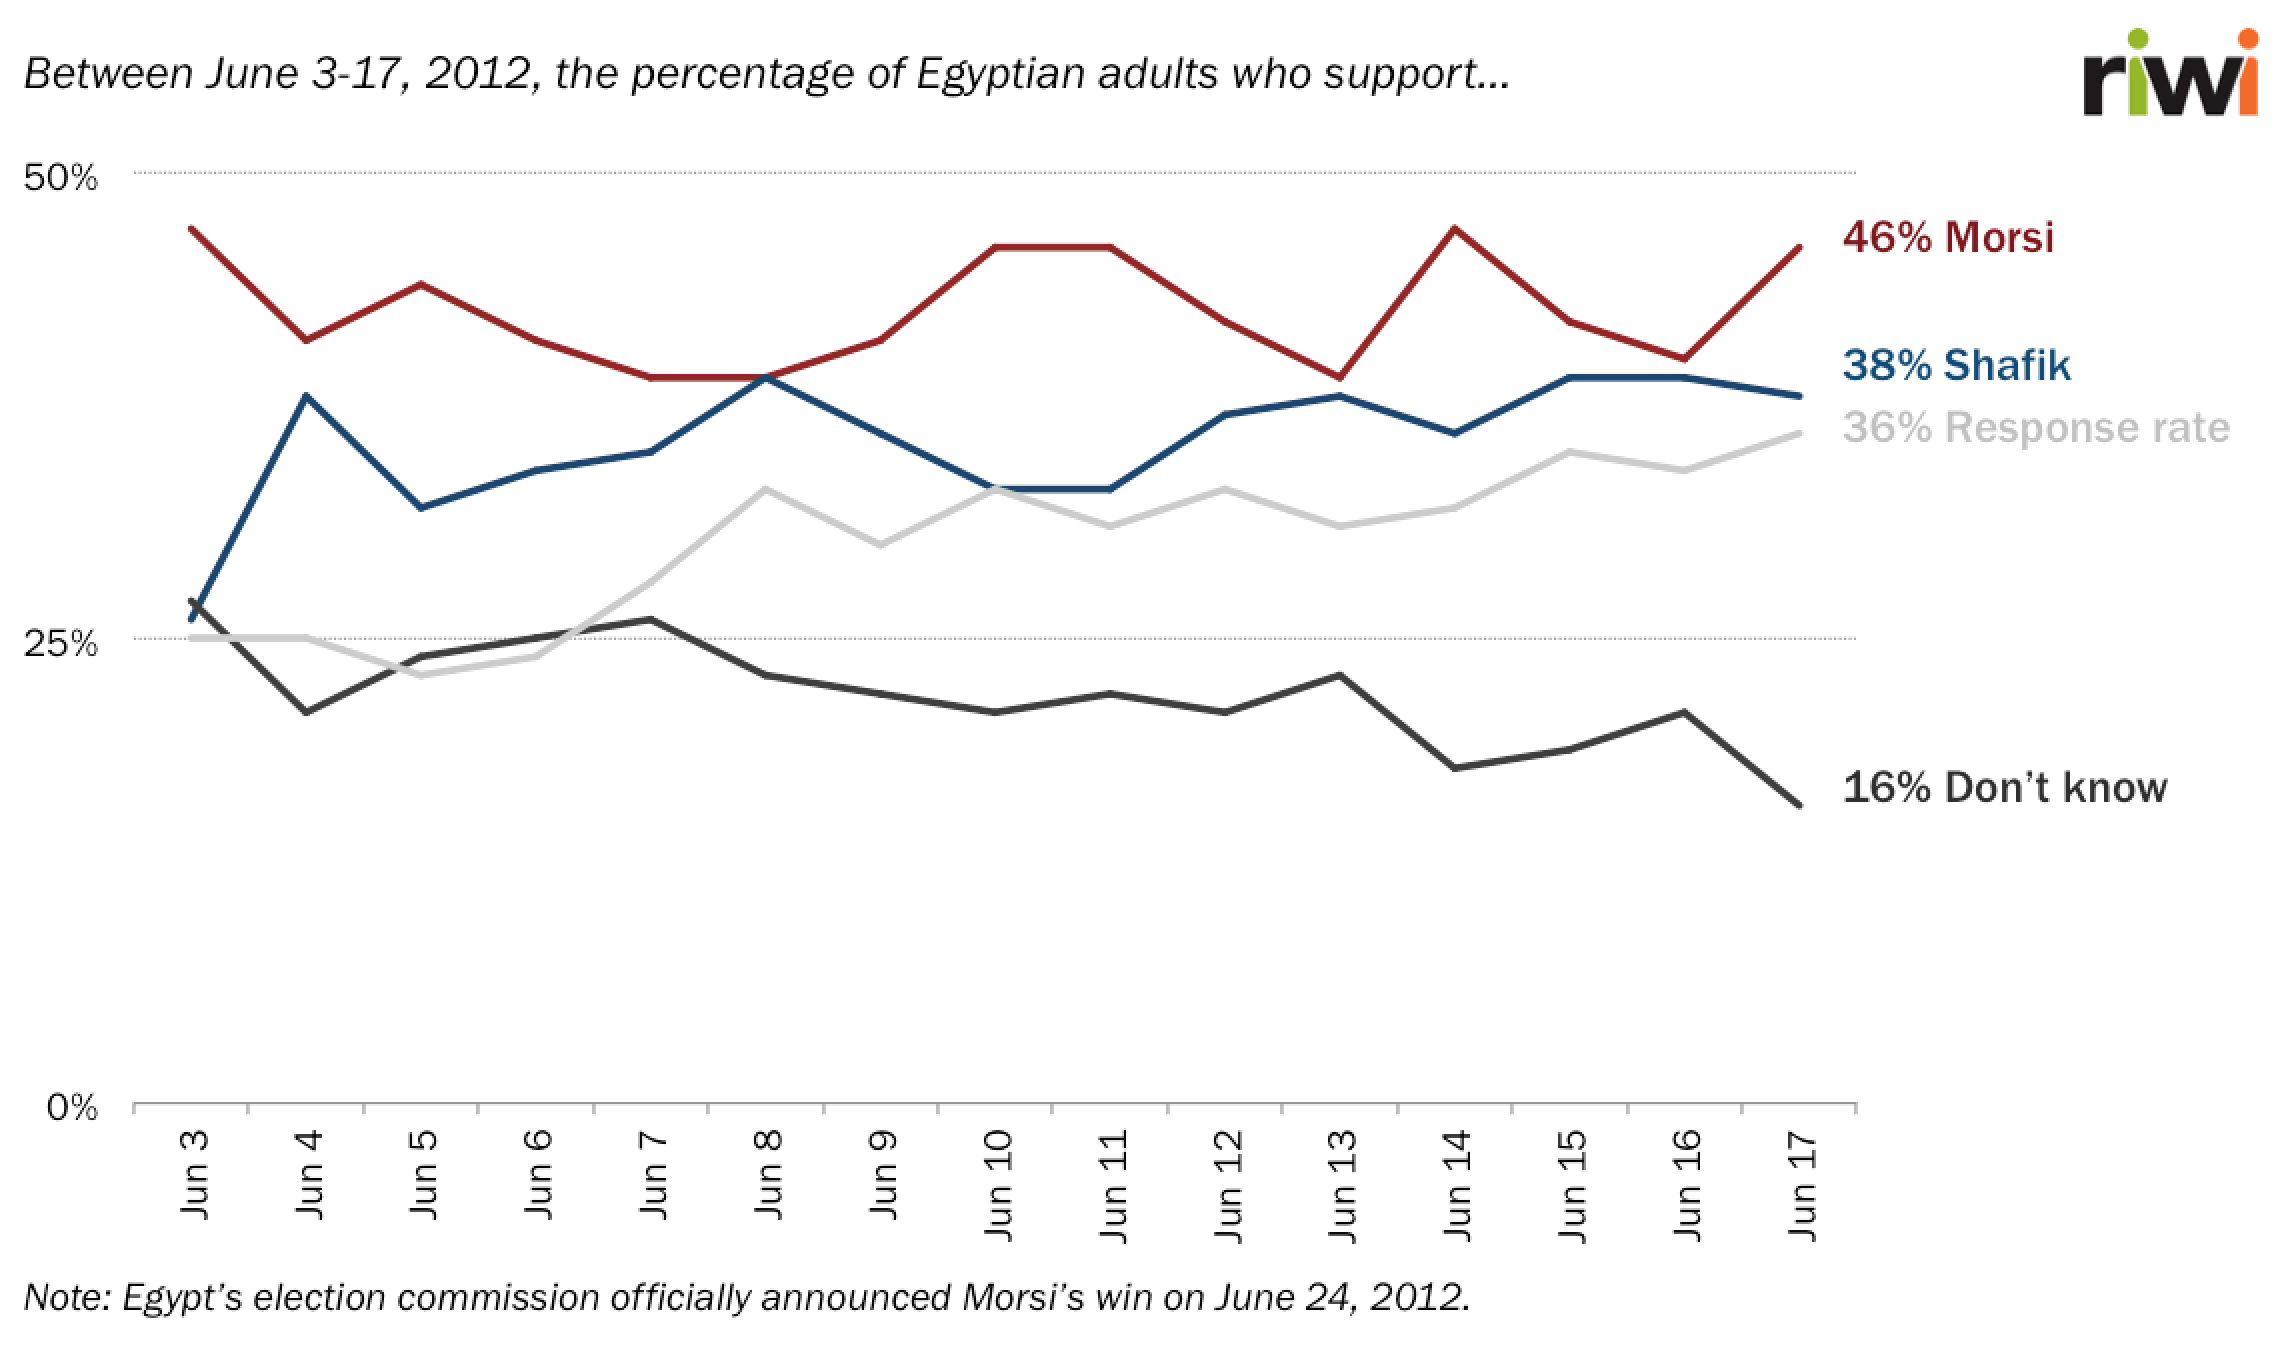 Percentage of Egyptian adults who support Morsi/Shafik